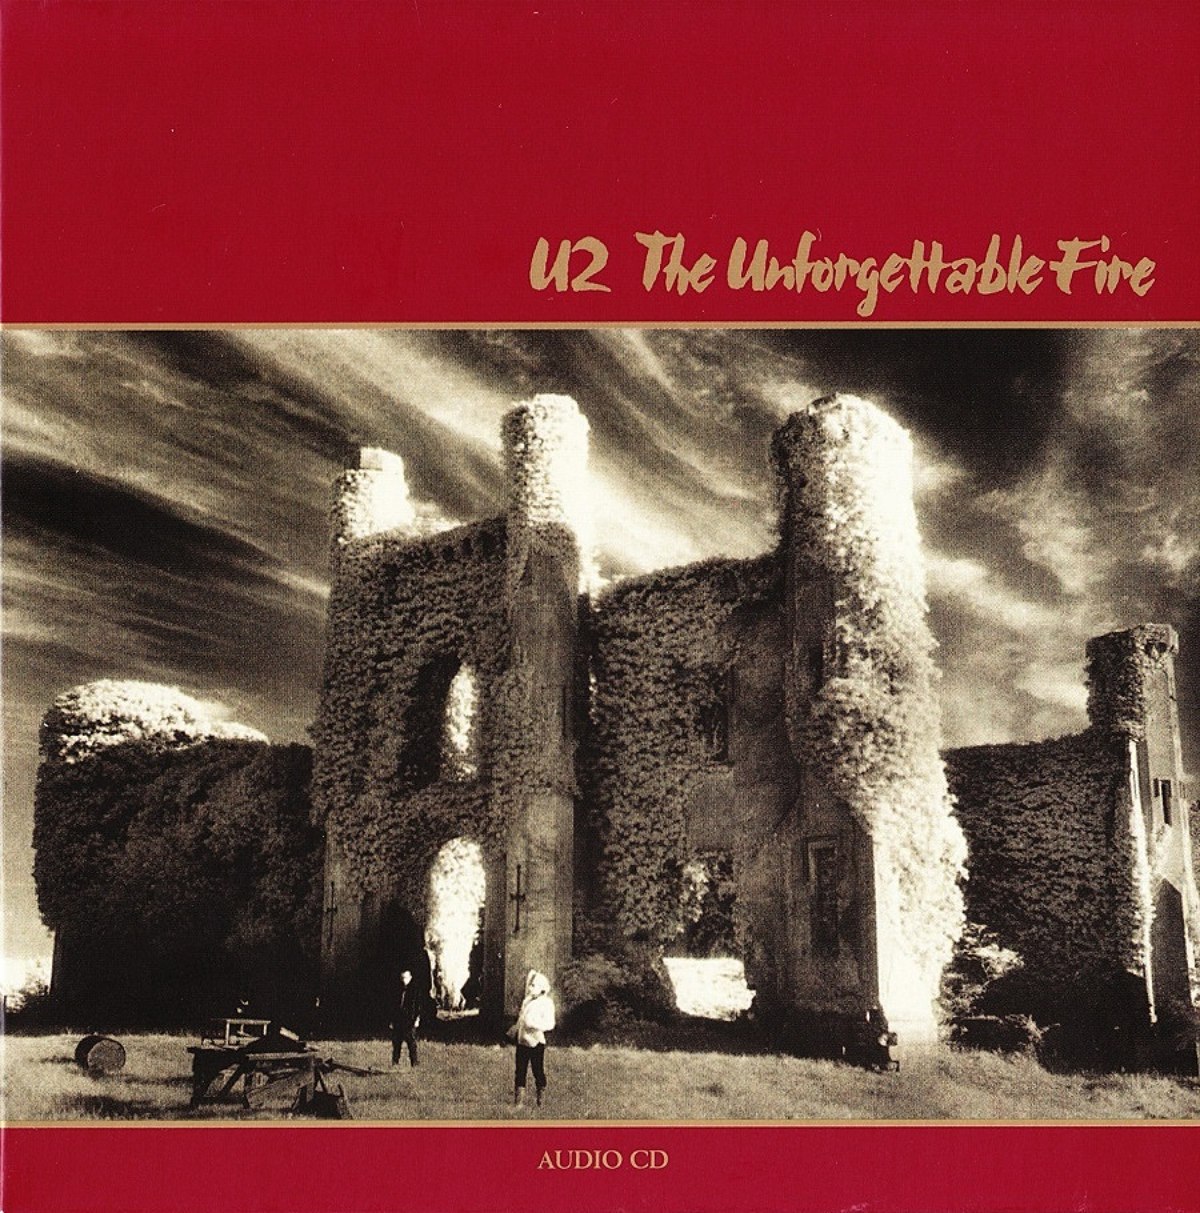 Cover of U2's "The Unforgettable Fire" album